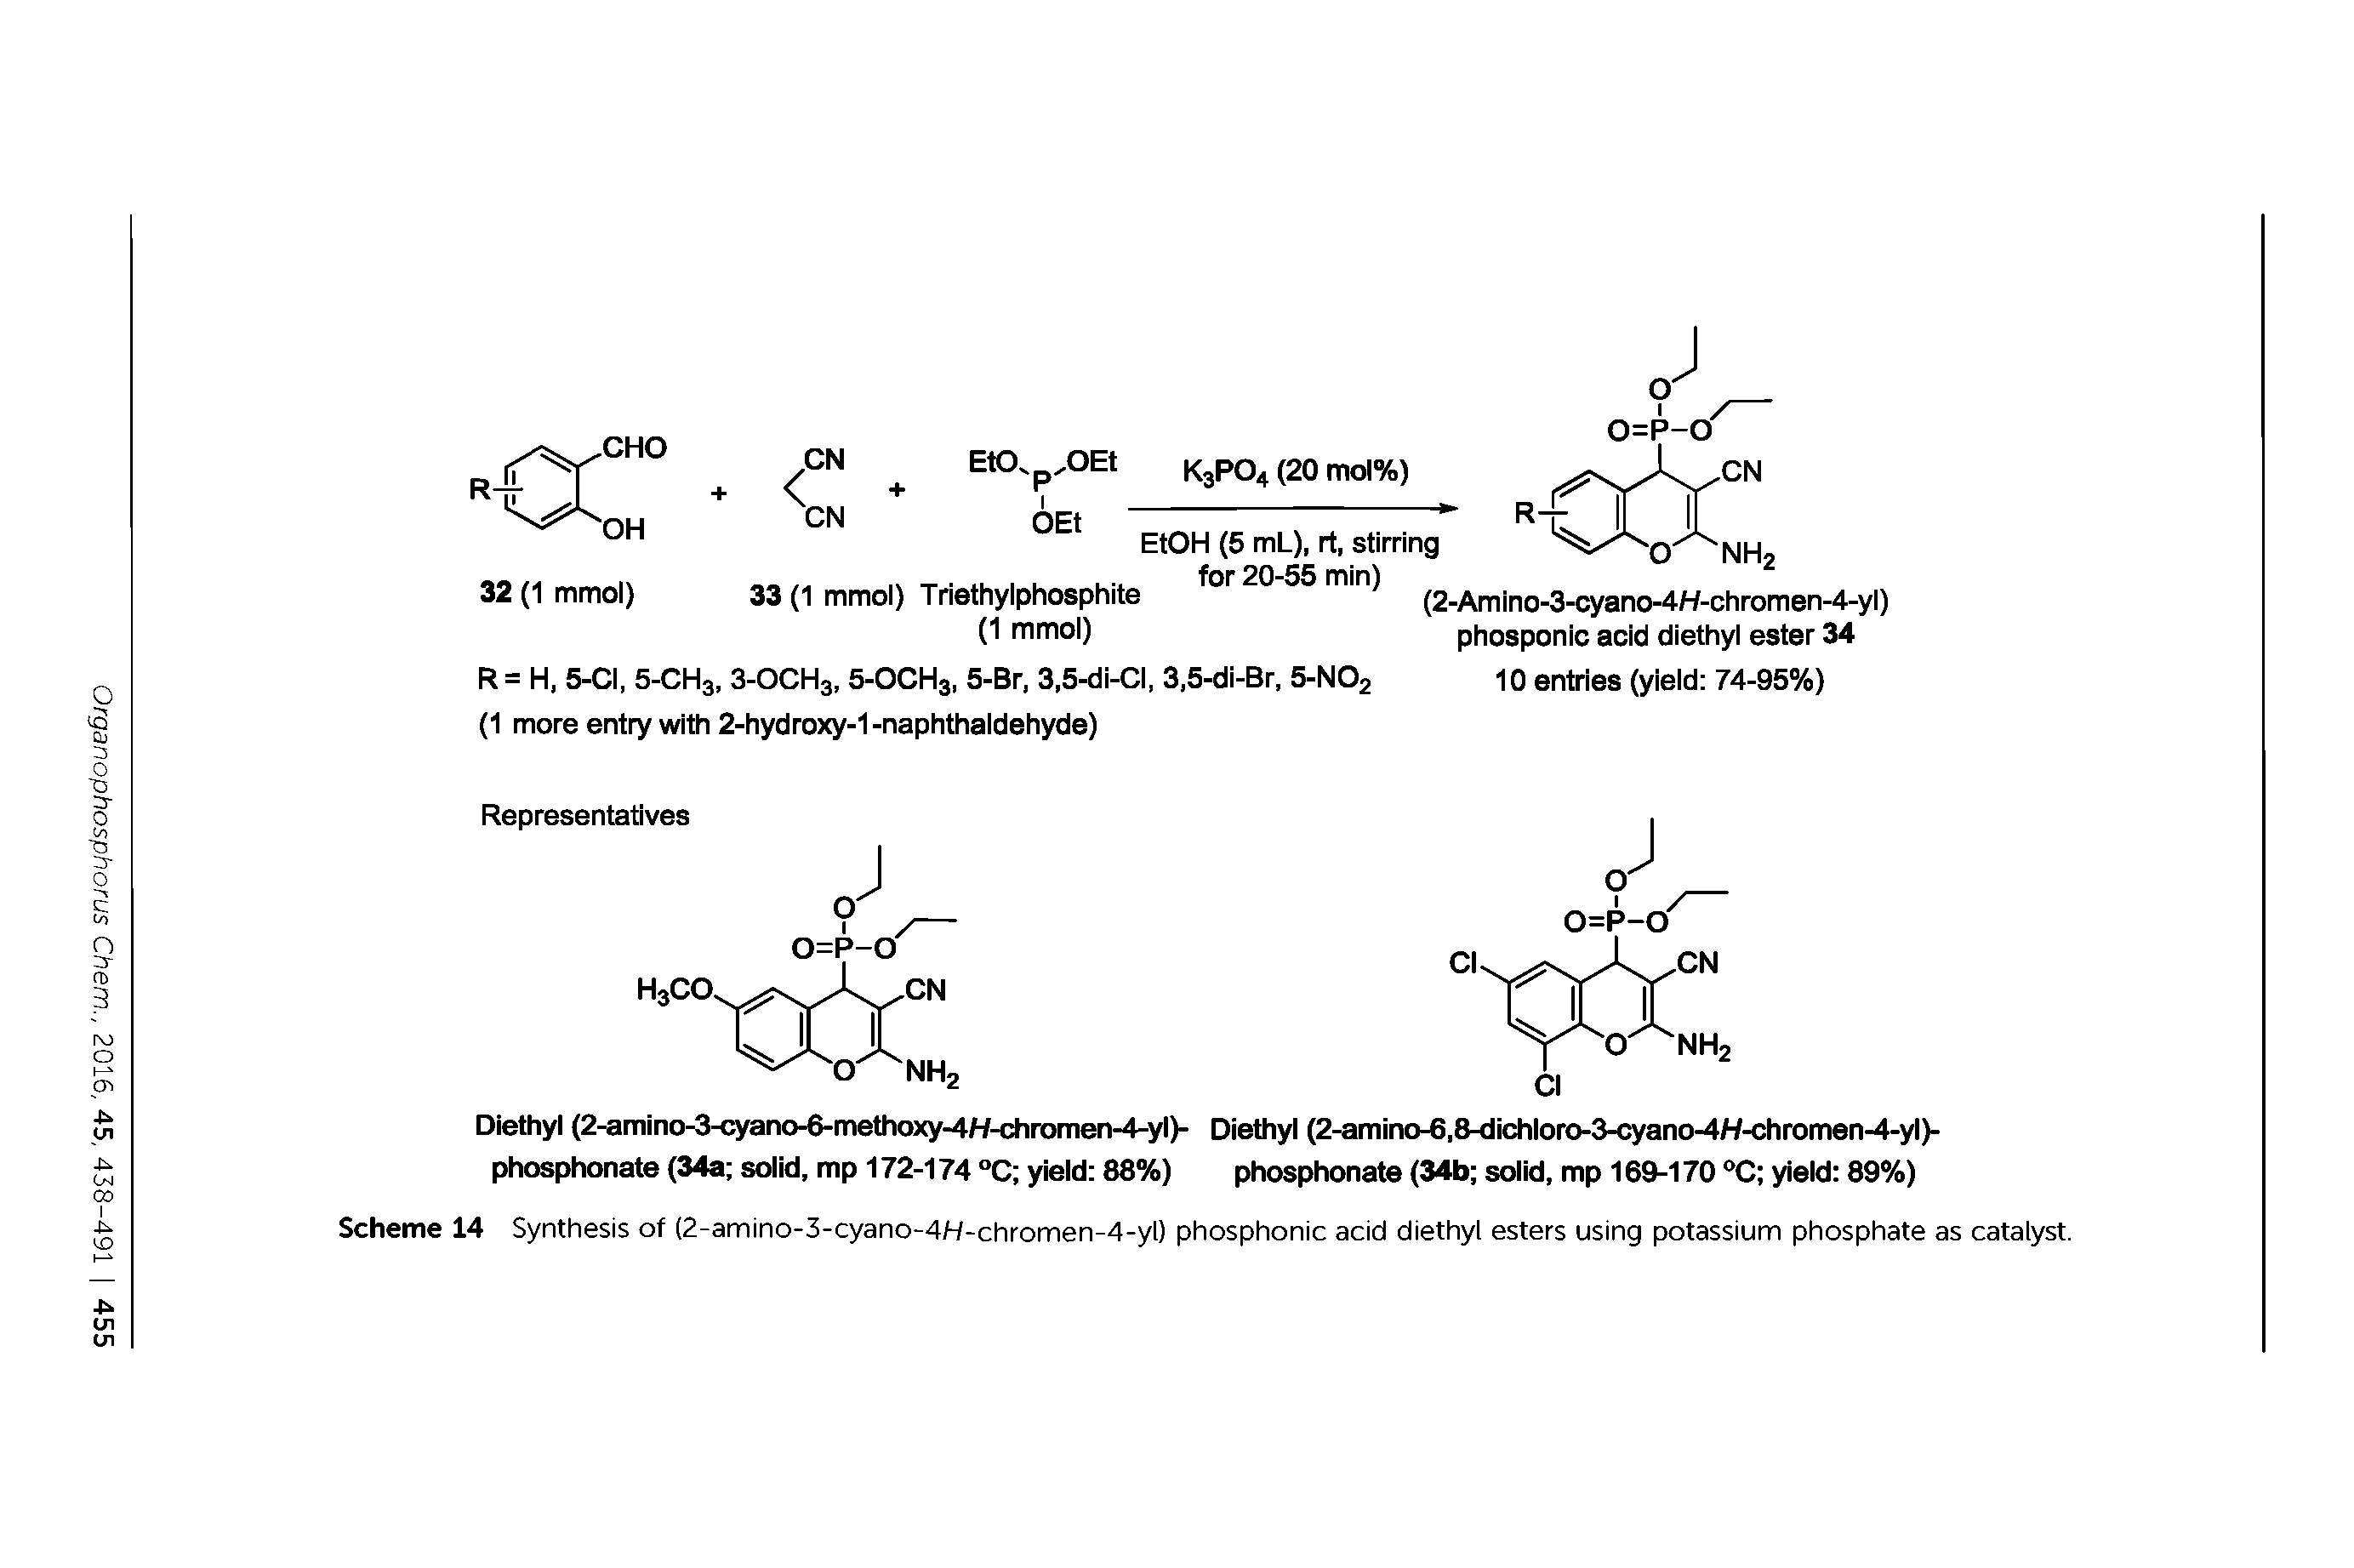 Scheme 14 Synthesis of (2-amino-3-cyano-4/-/-chromen-4-yl) phosphonic acid diethyl esters using potassium phosphate as catalyst.